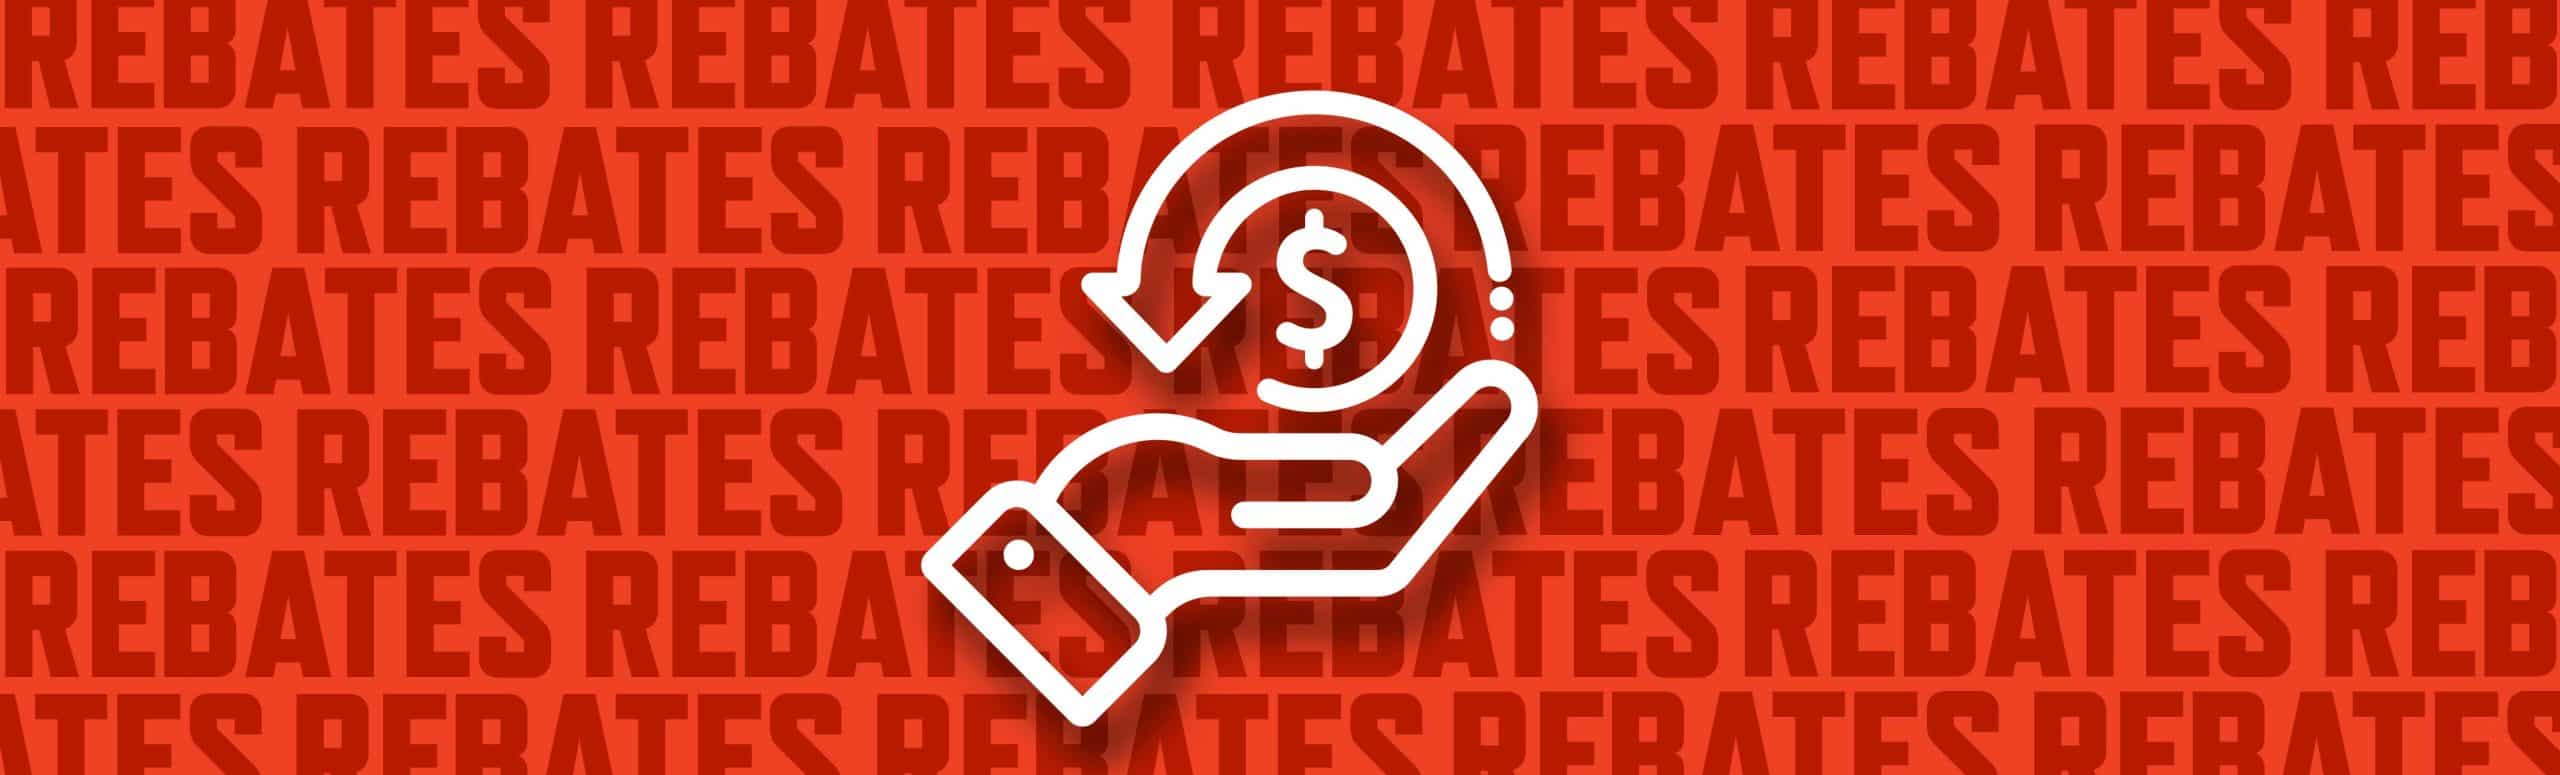 Red rebates background with money saving icon